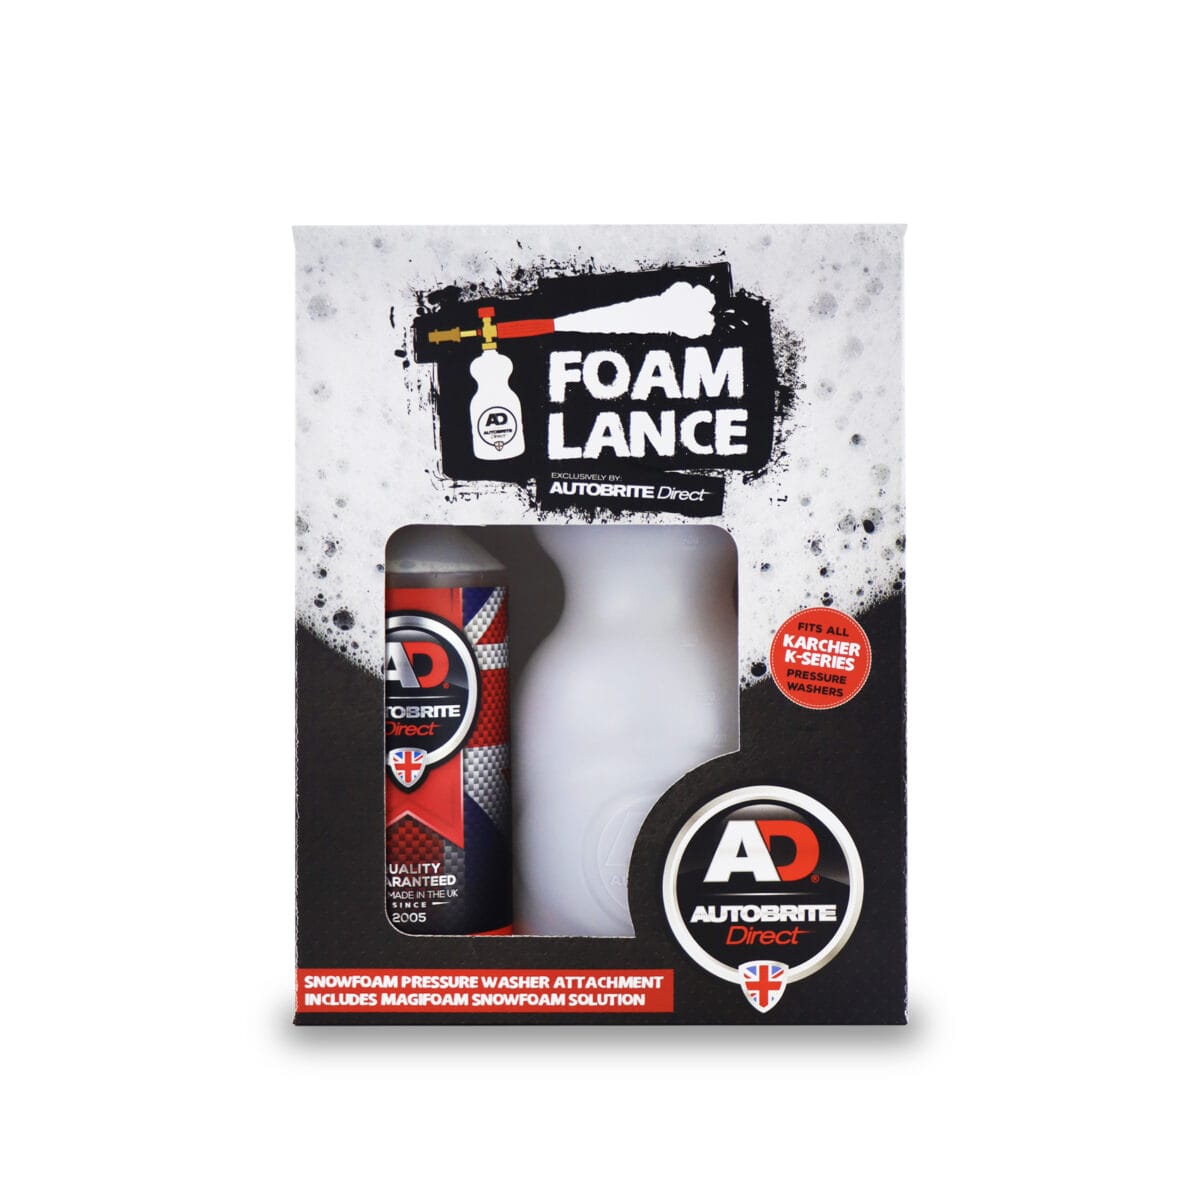 foam lance kit